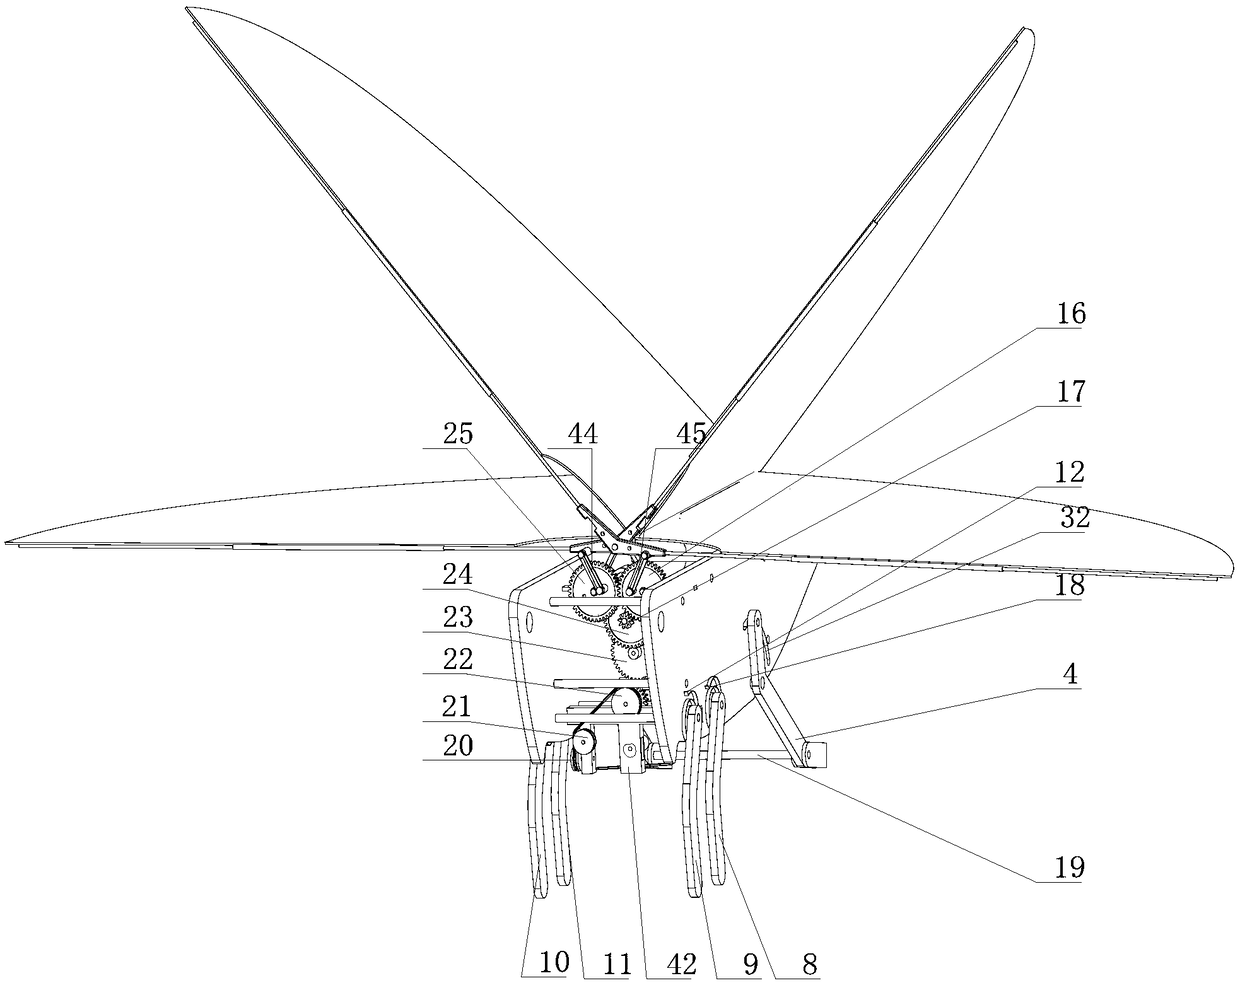 Locust-like flying jumping robot based on metamorphic mechanism and its flight control method